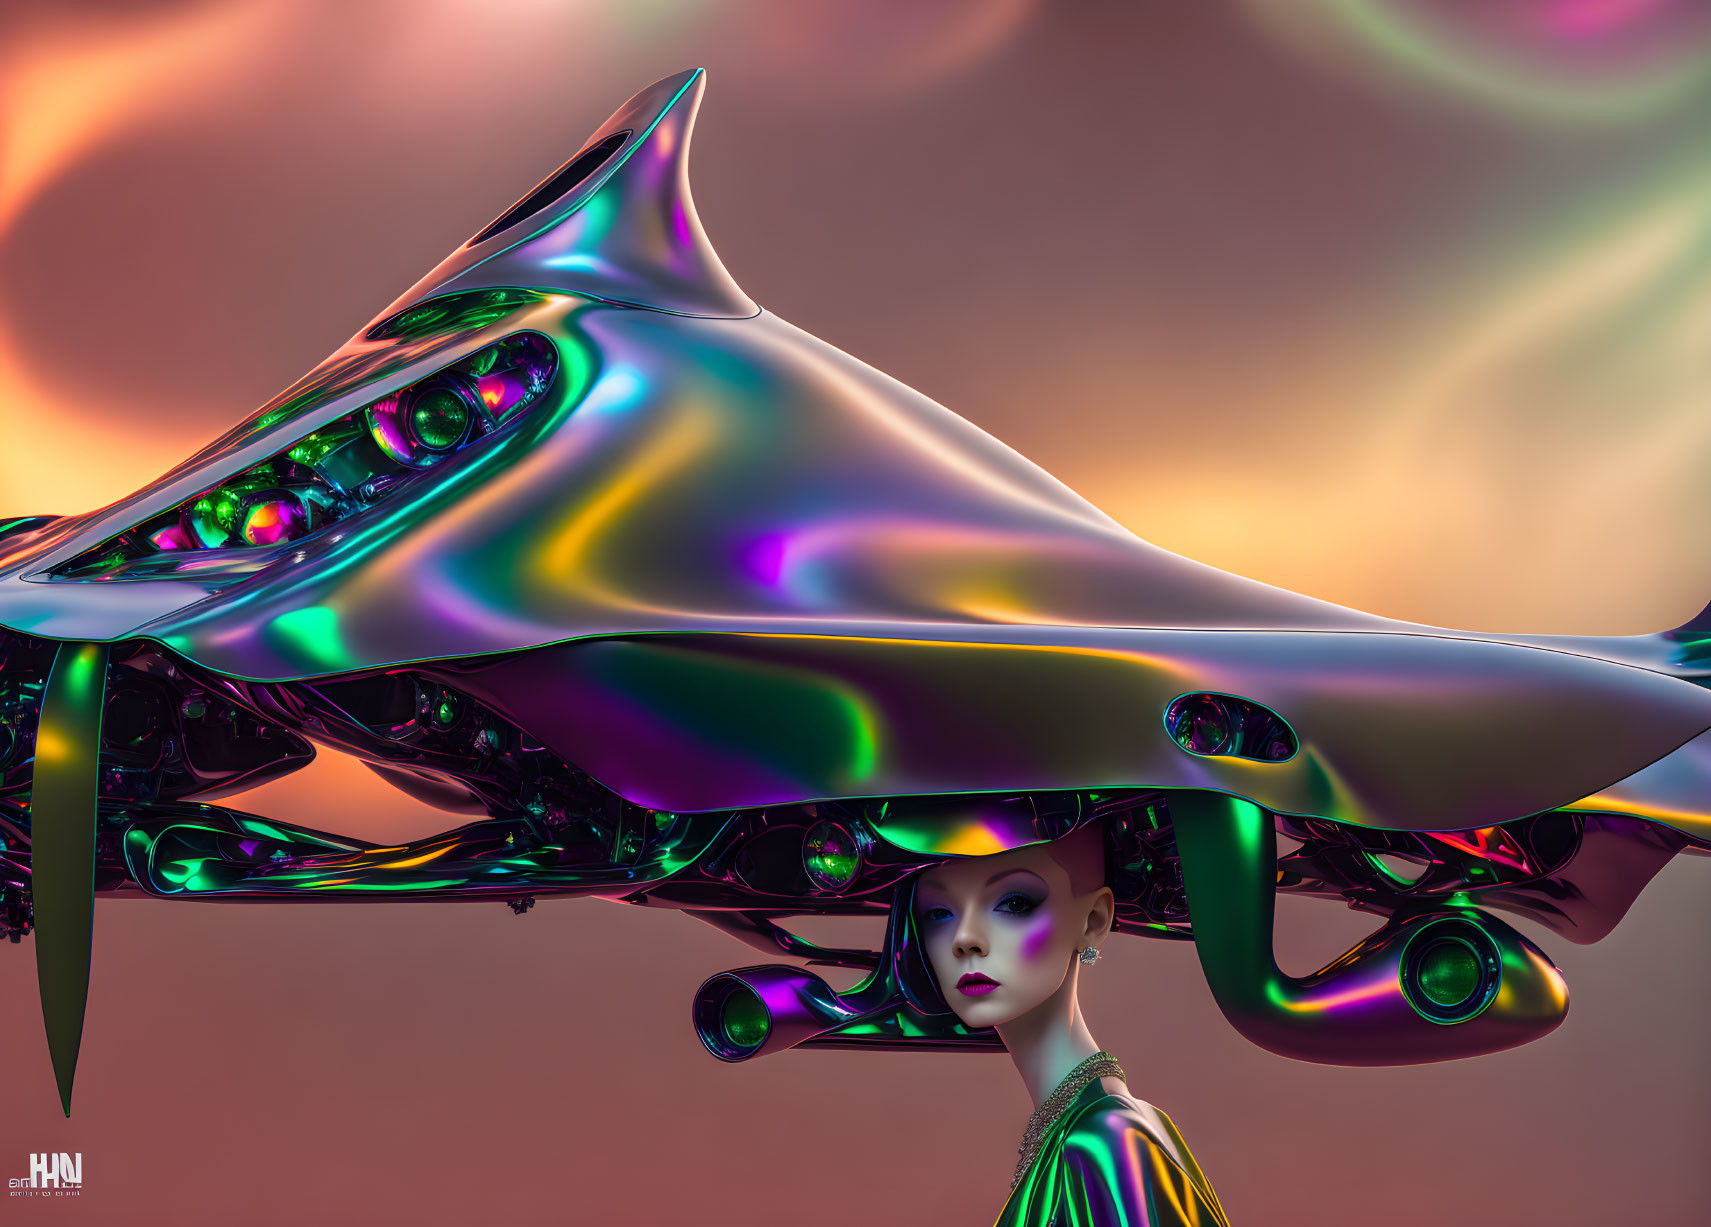 Surreal artwork: Metallic, iridescent structure with shark-like aesthetics and stylized female figure